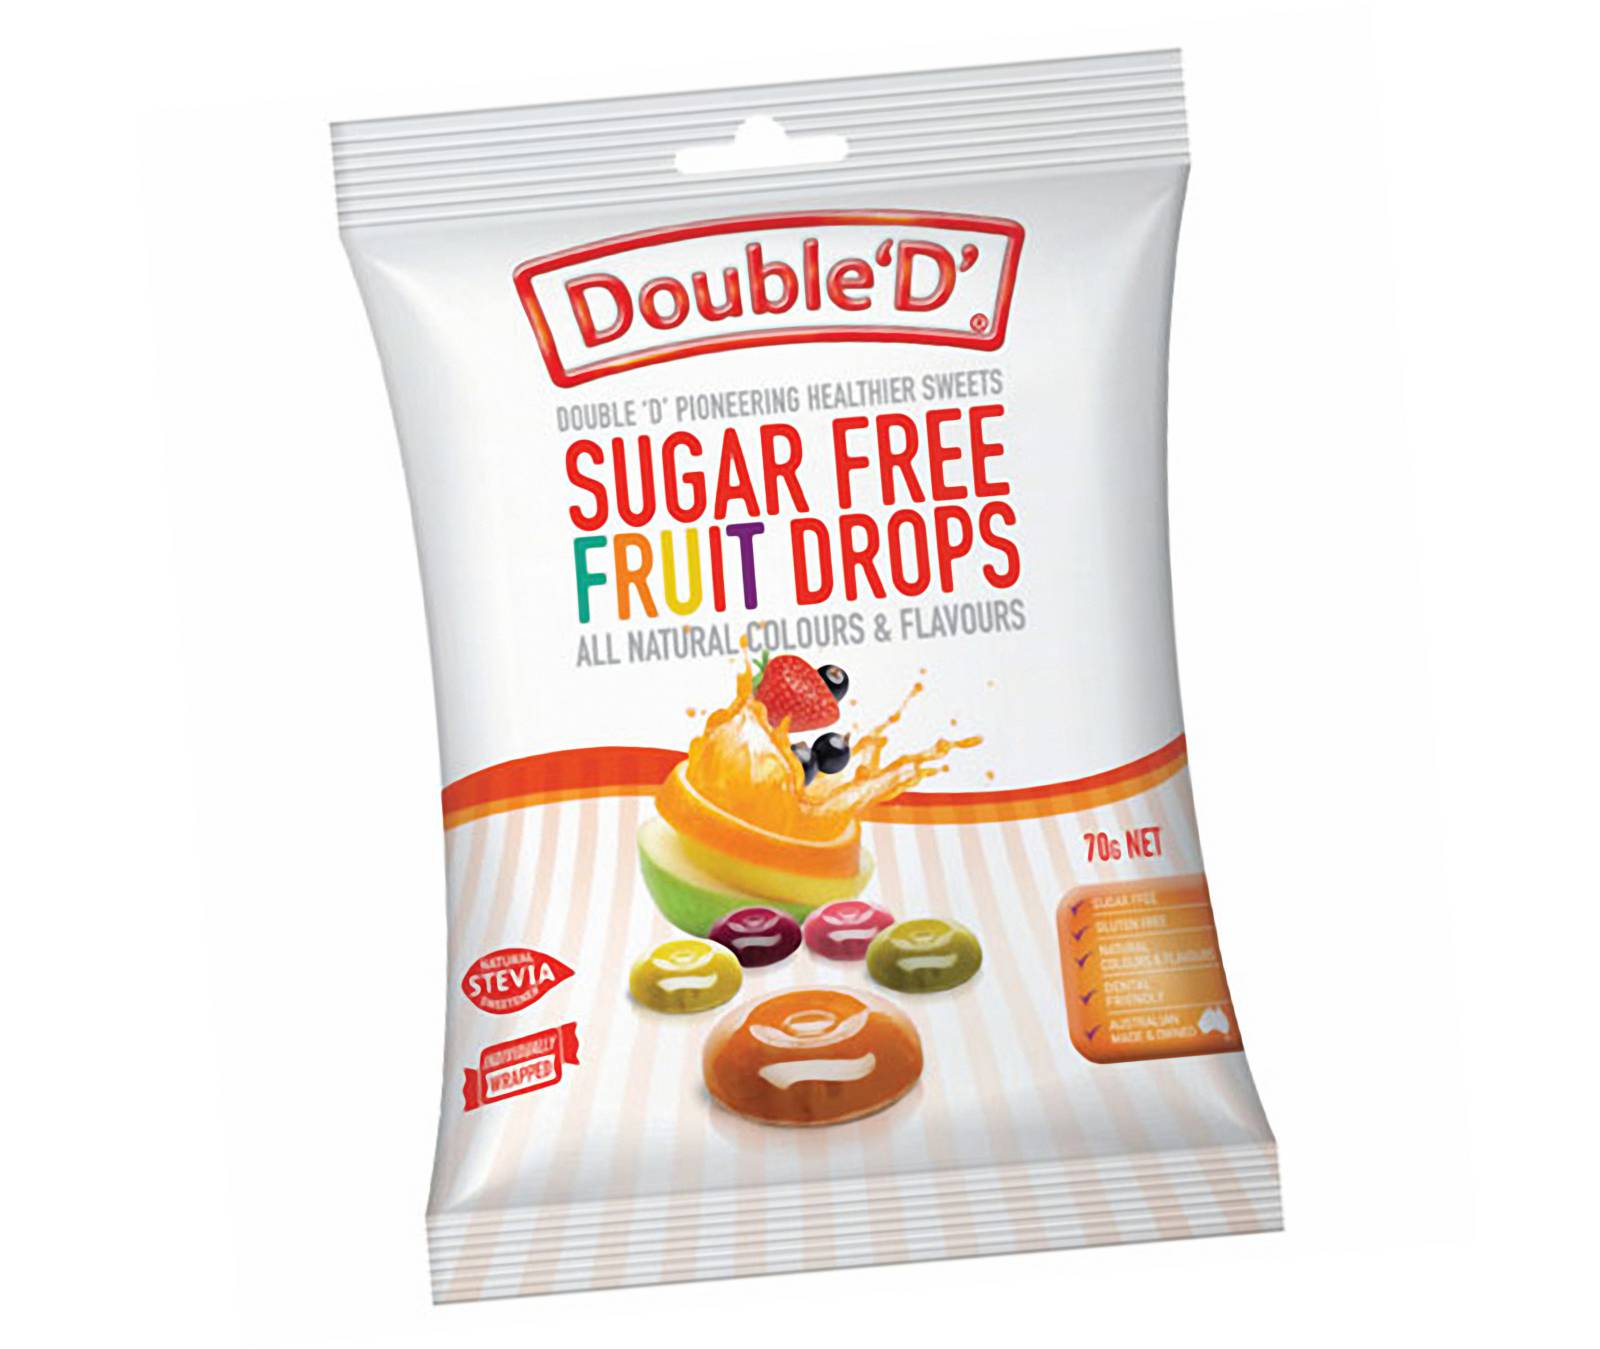 https://livelaughlove.nz/wp-content/uploads/2019/05/Sugar-Free-Fruit-Drops.jpg